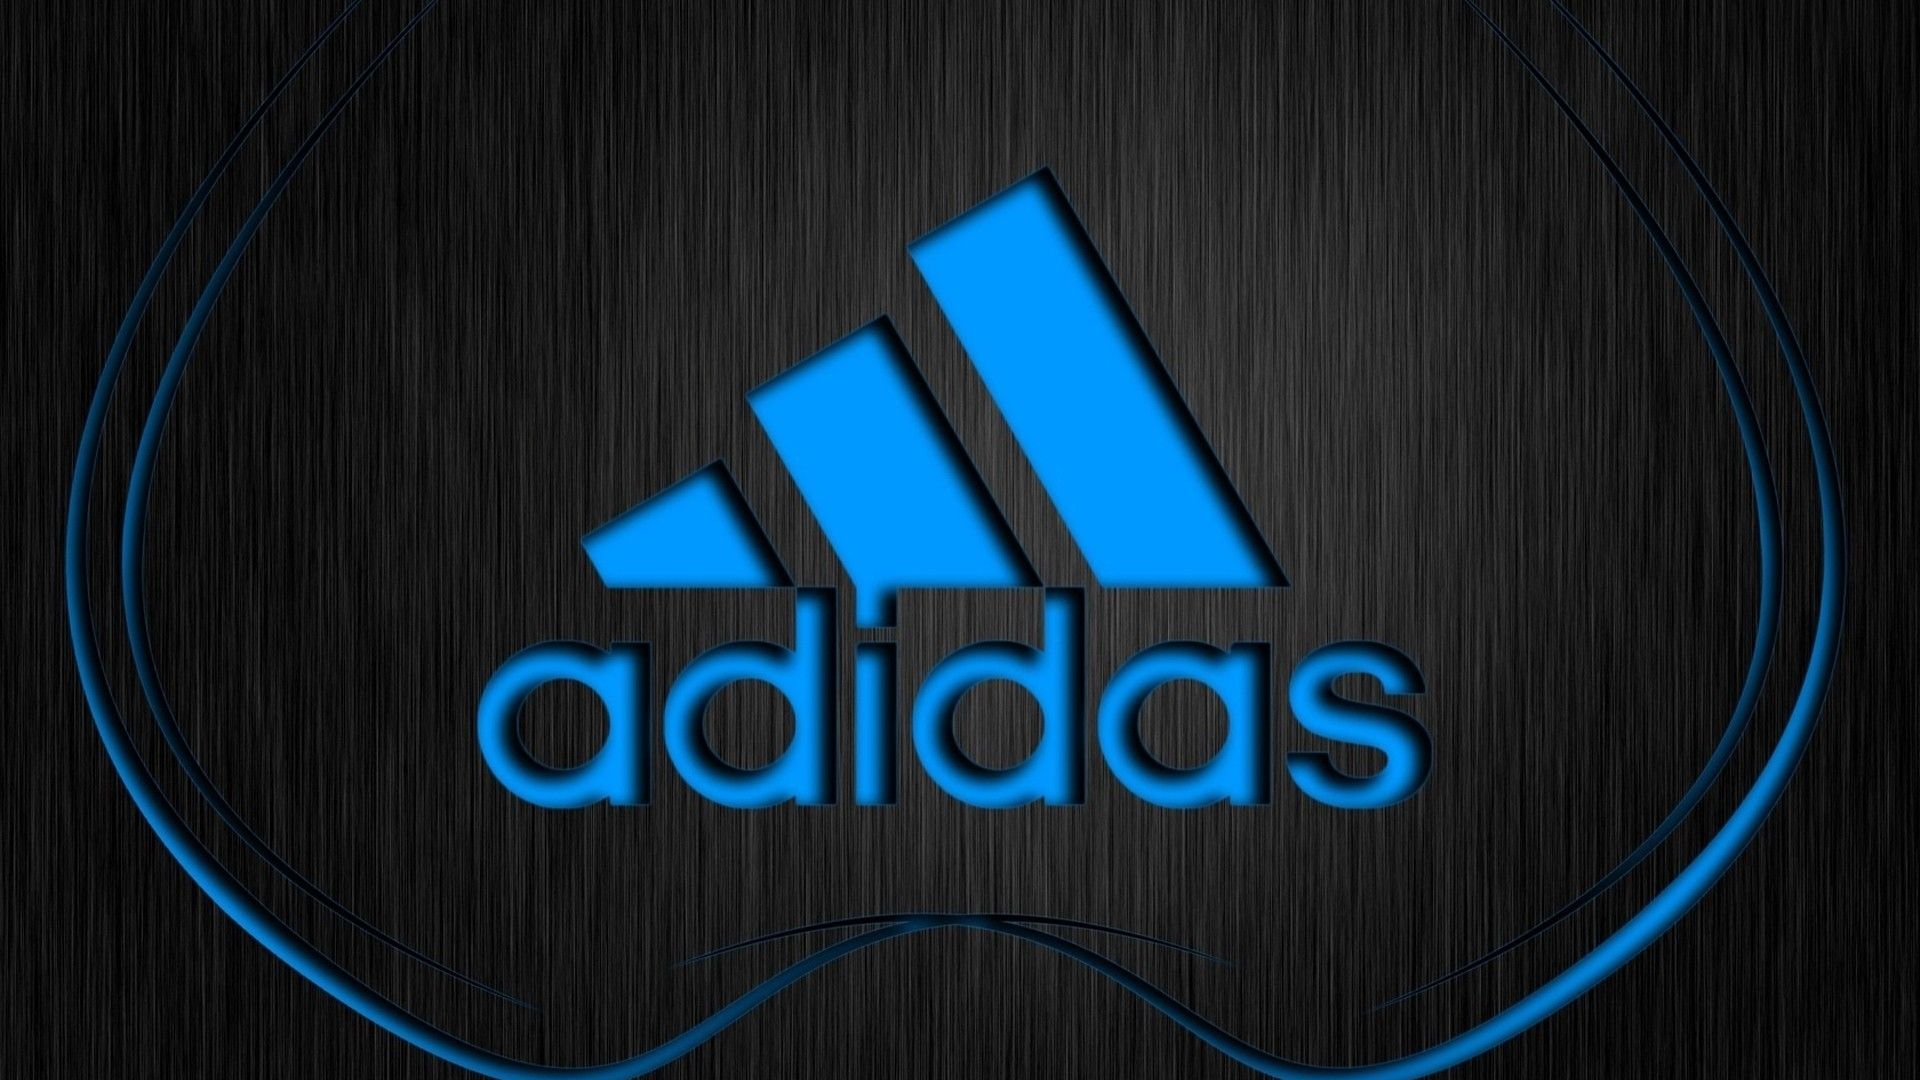 adidas logo hd wallpapers 1080p